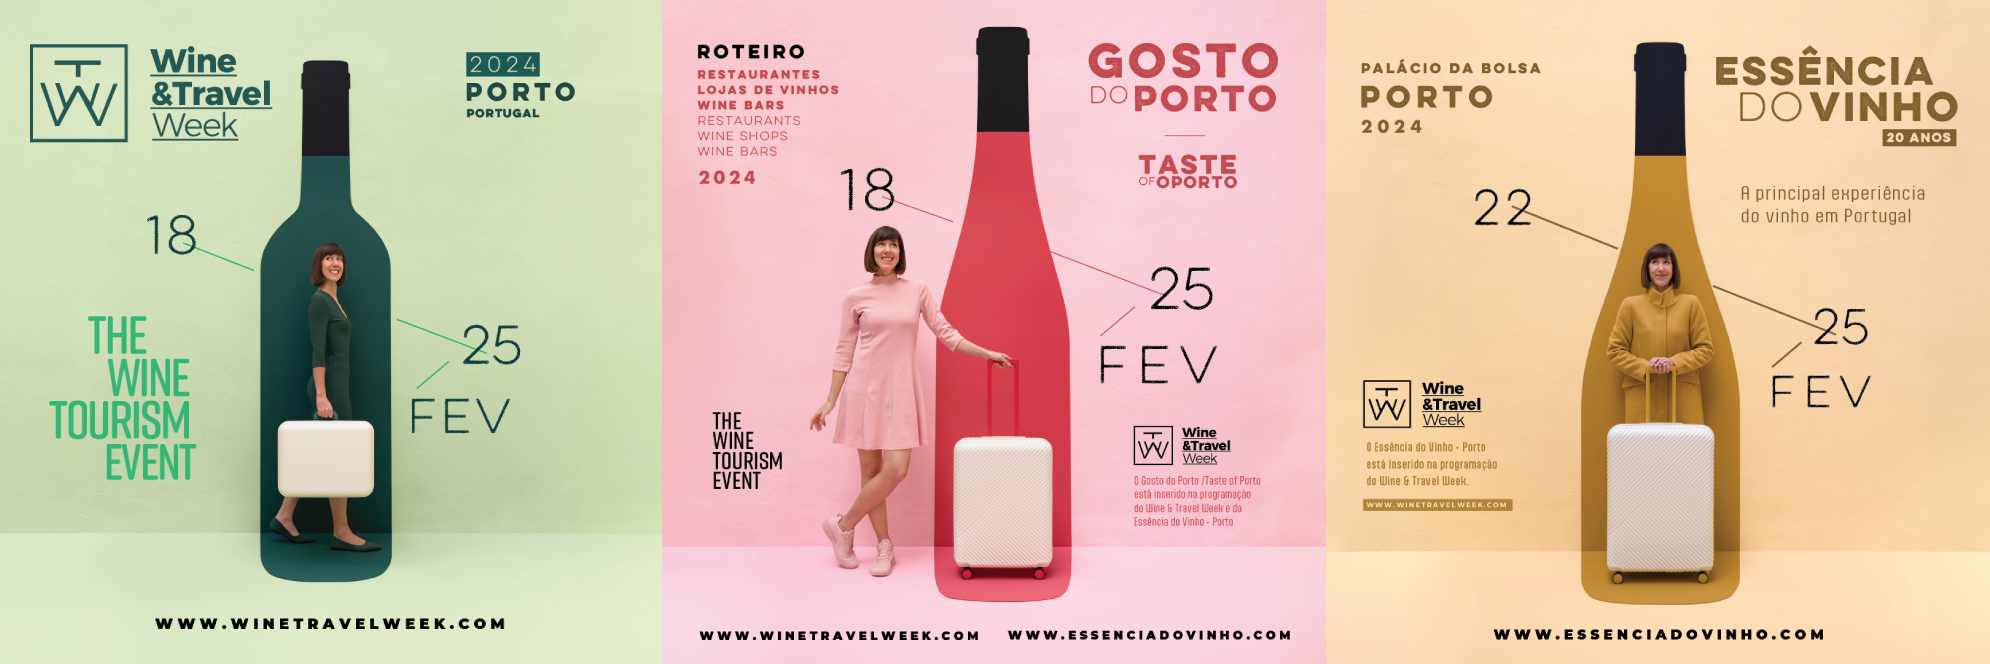 Destinations, Spectacles and Essência: Wine & Travel Week Transforms Porto into a Wine Tourism Capital